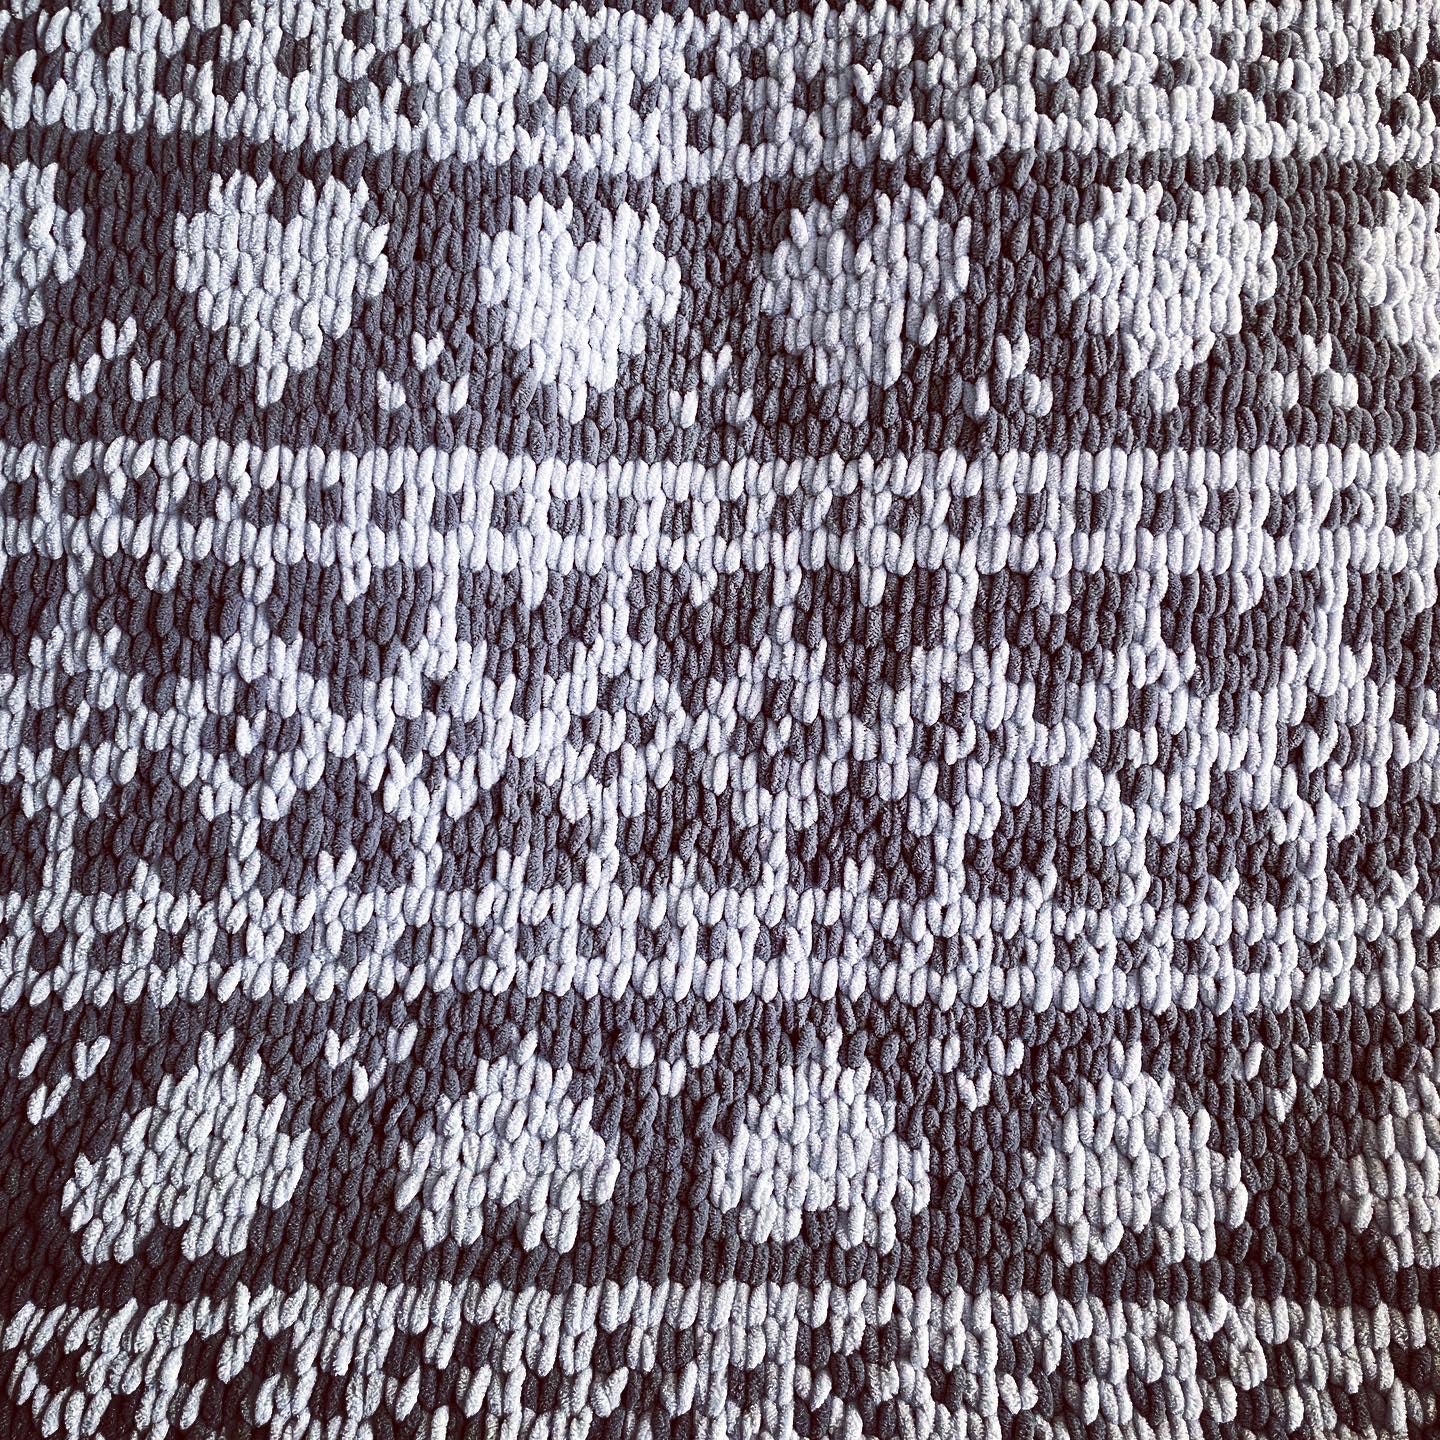 Ravelry: Oval Rag Rug pattern by I Love My Blanket